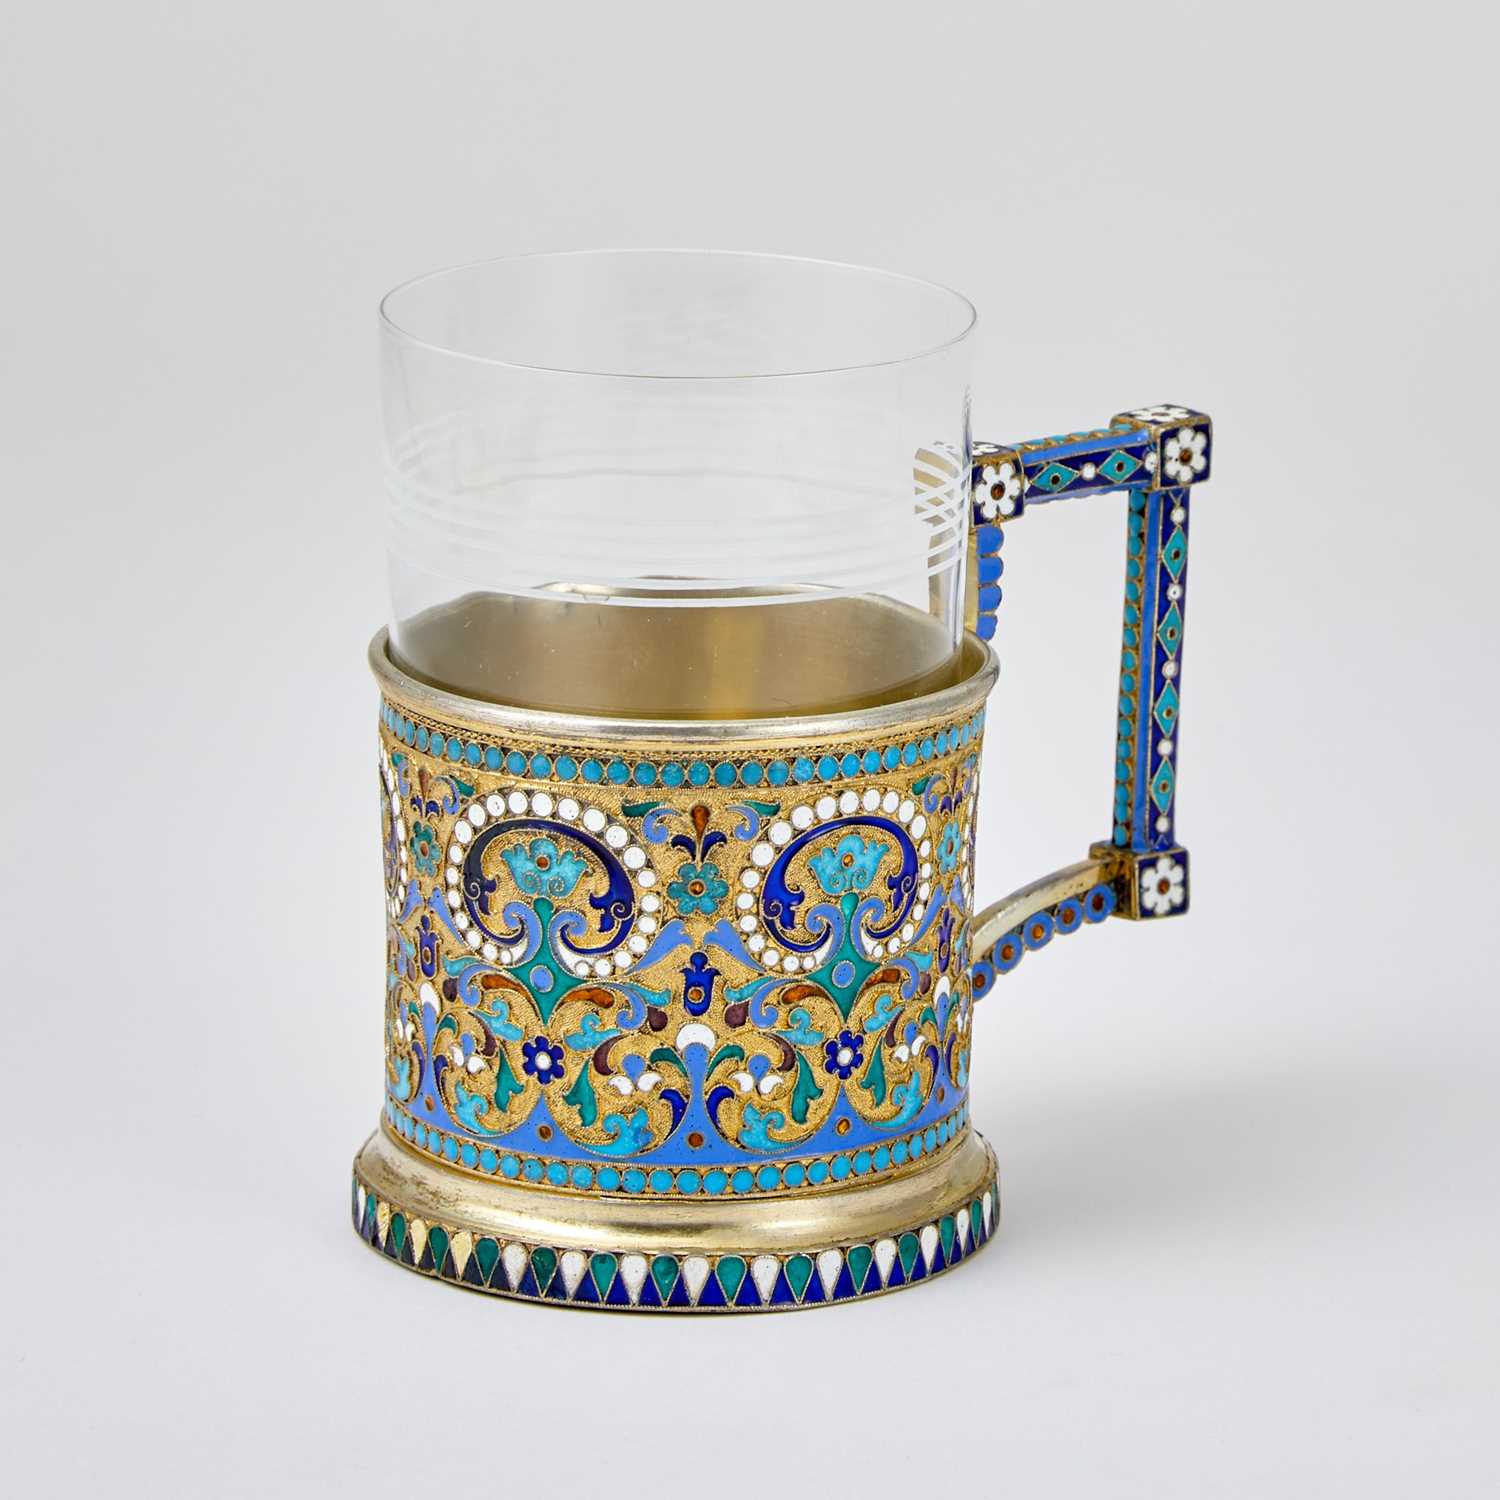 Lot 726 - Russian Silver-Gilt and Cloisonné Enamel Tea Glass Holder